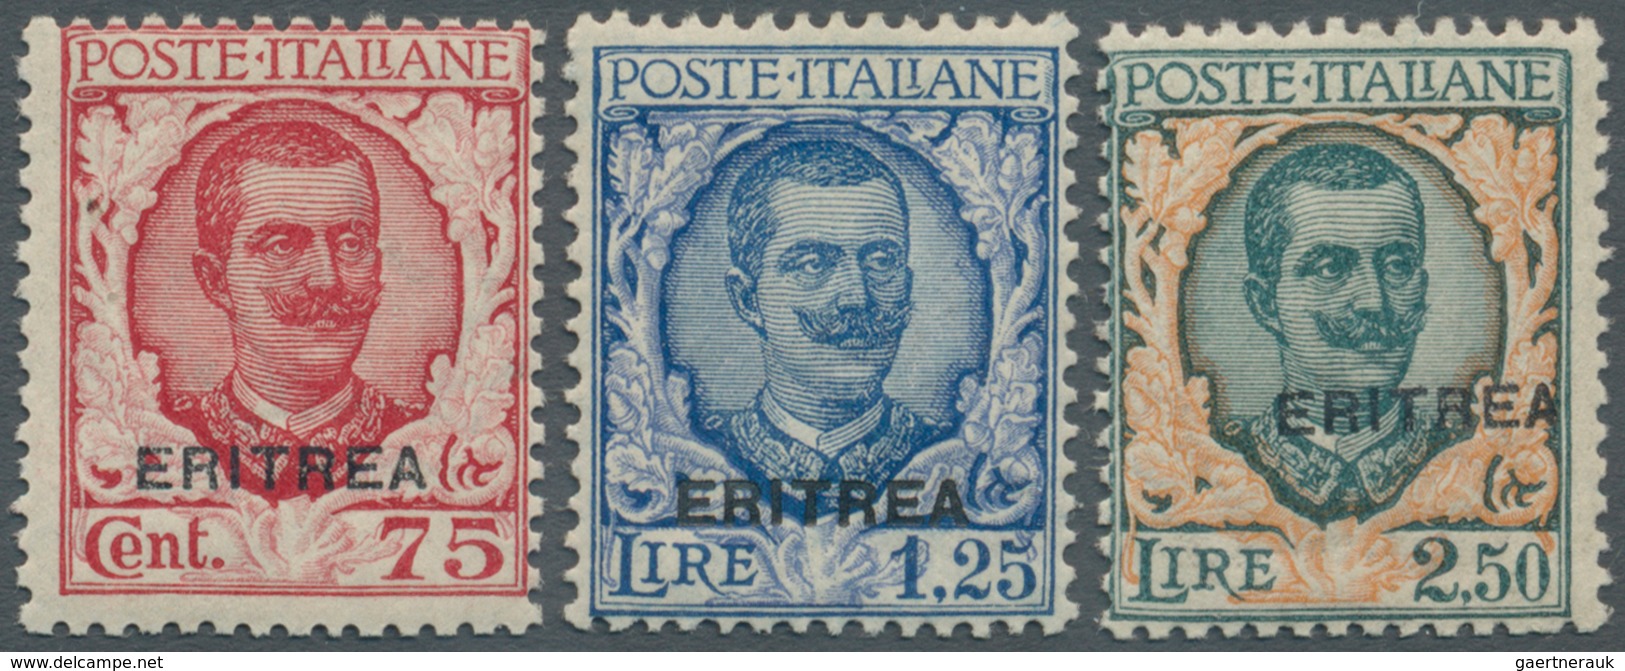 12061 Italienisch-Eritrea: 1926, Vittorio Emanuele, 75c., 1.25l. And 2.50l., Complete Set Unmounted Mint. - Eritrea